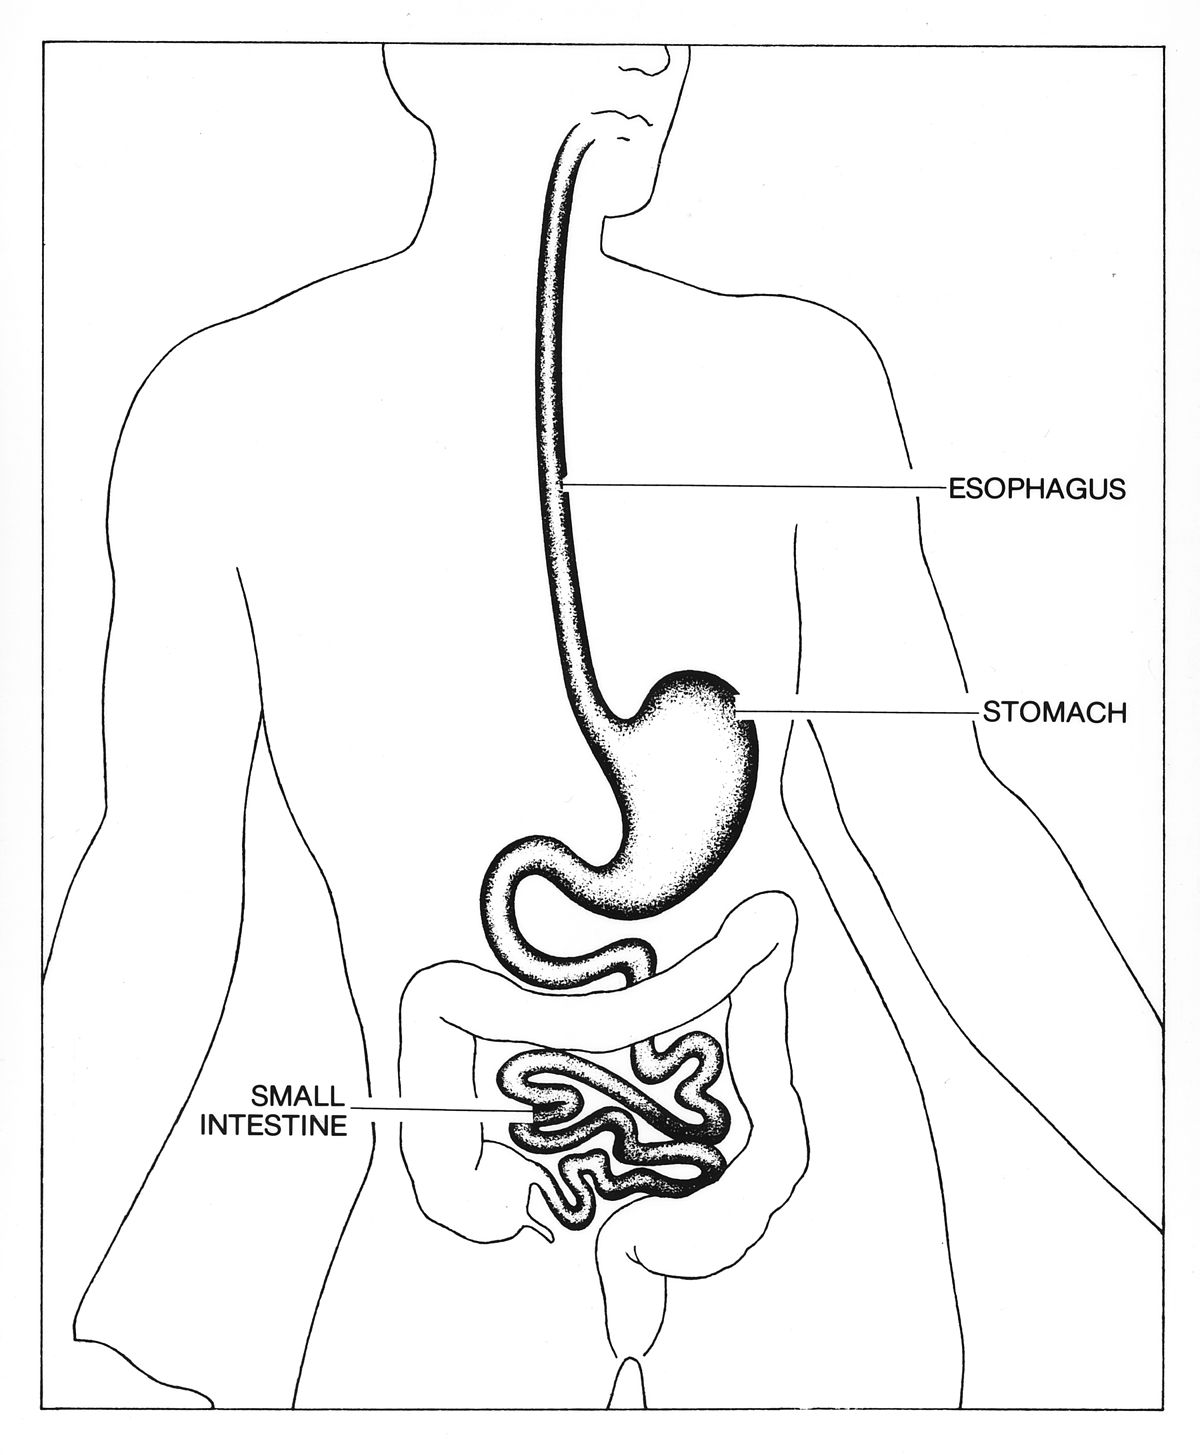 File:Esophagus, stomach, small intestine.jpg - Wikimedia Commons